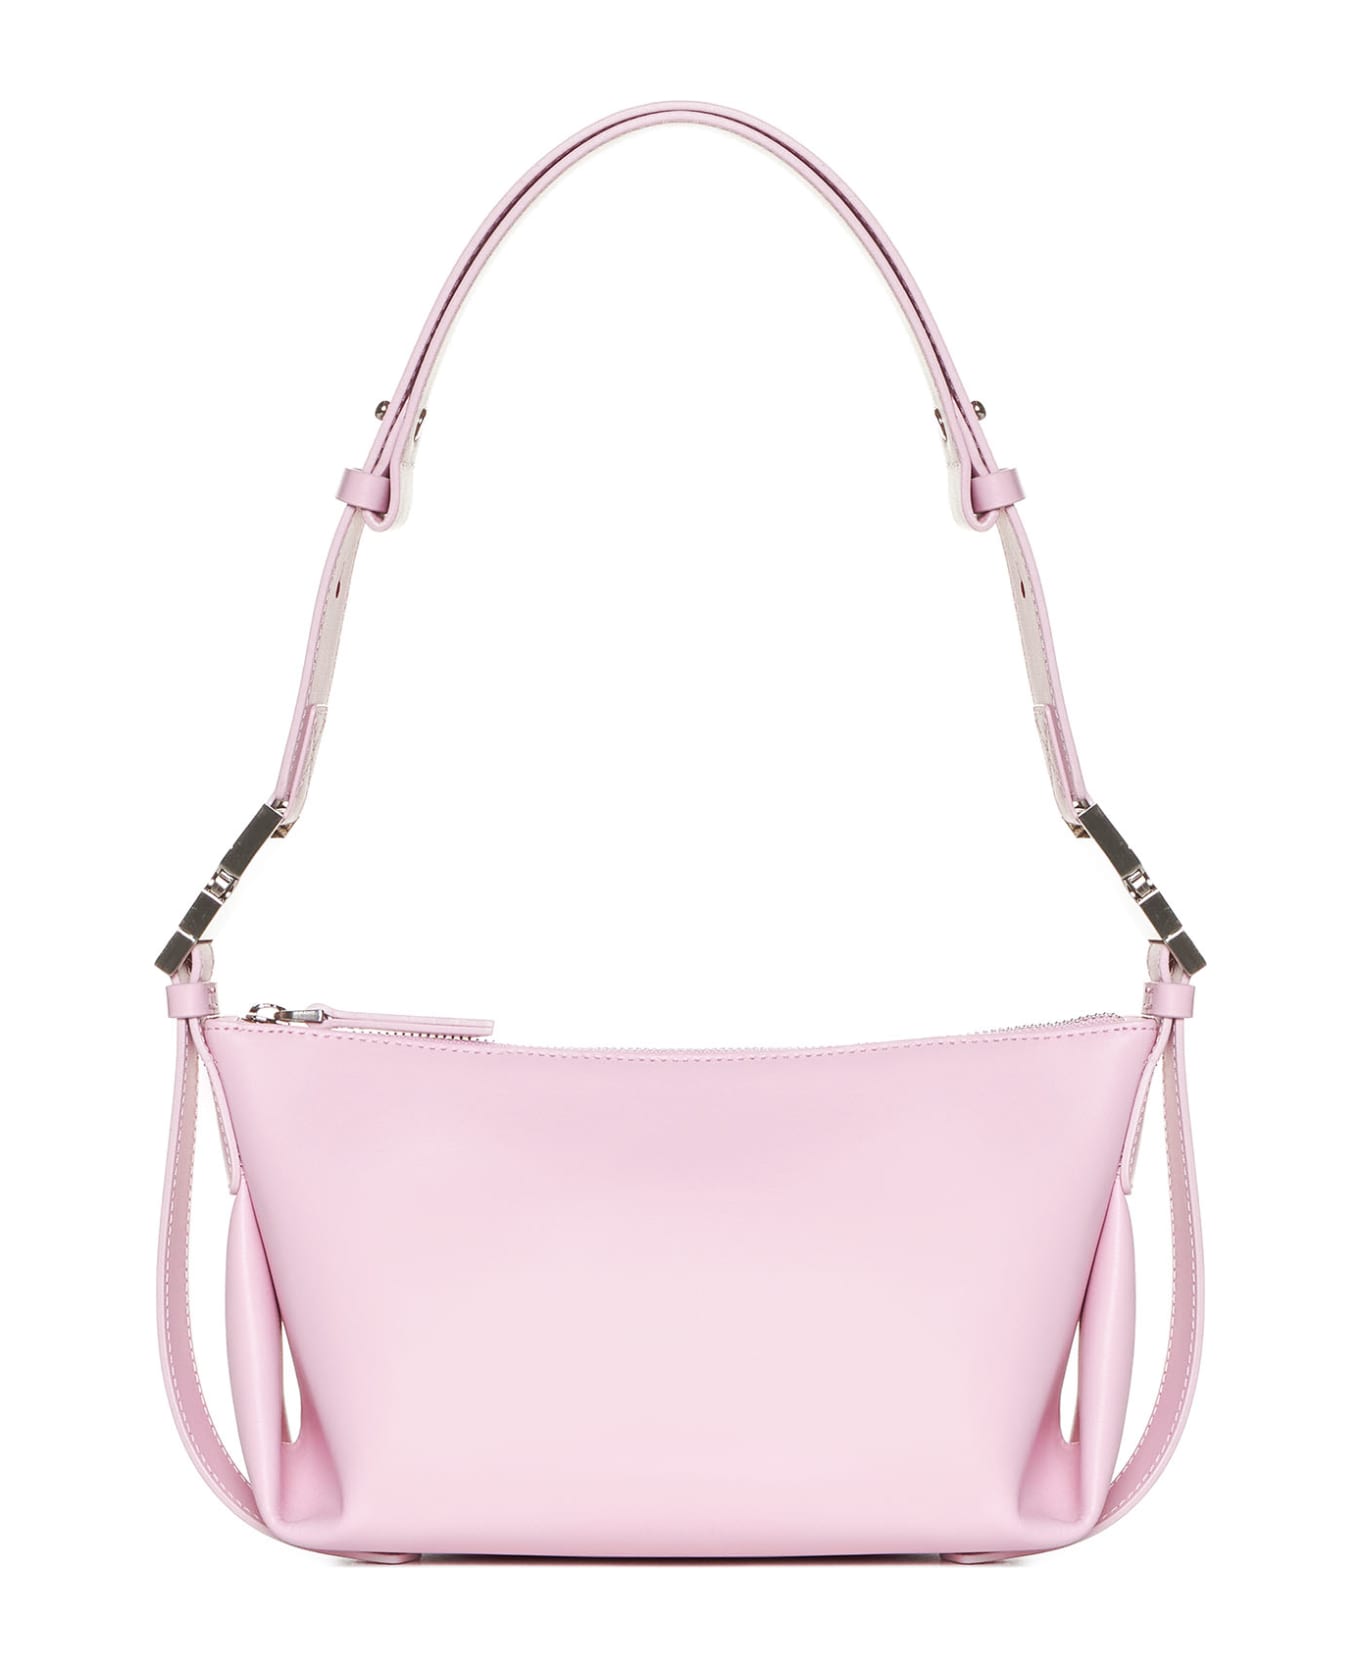 OSOI Shoulder Bag - Baby pink ショルダーバッグ